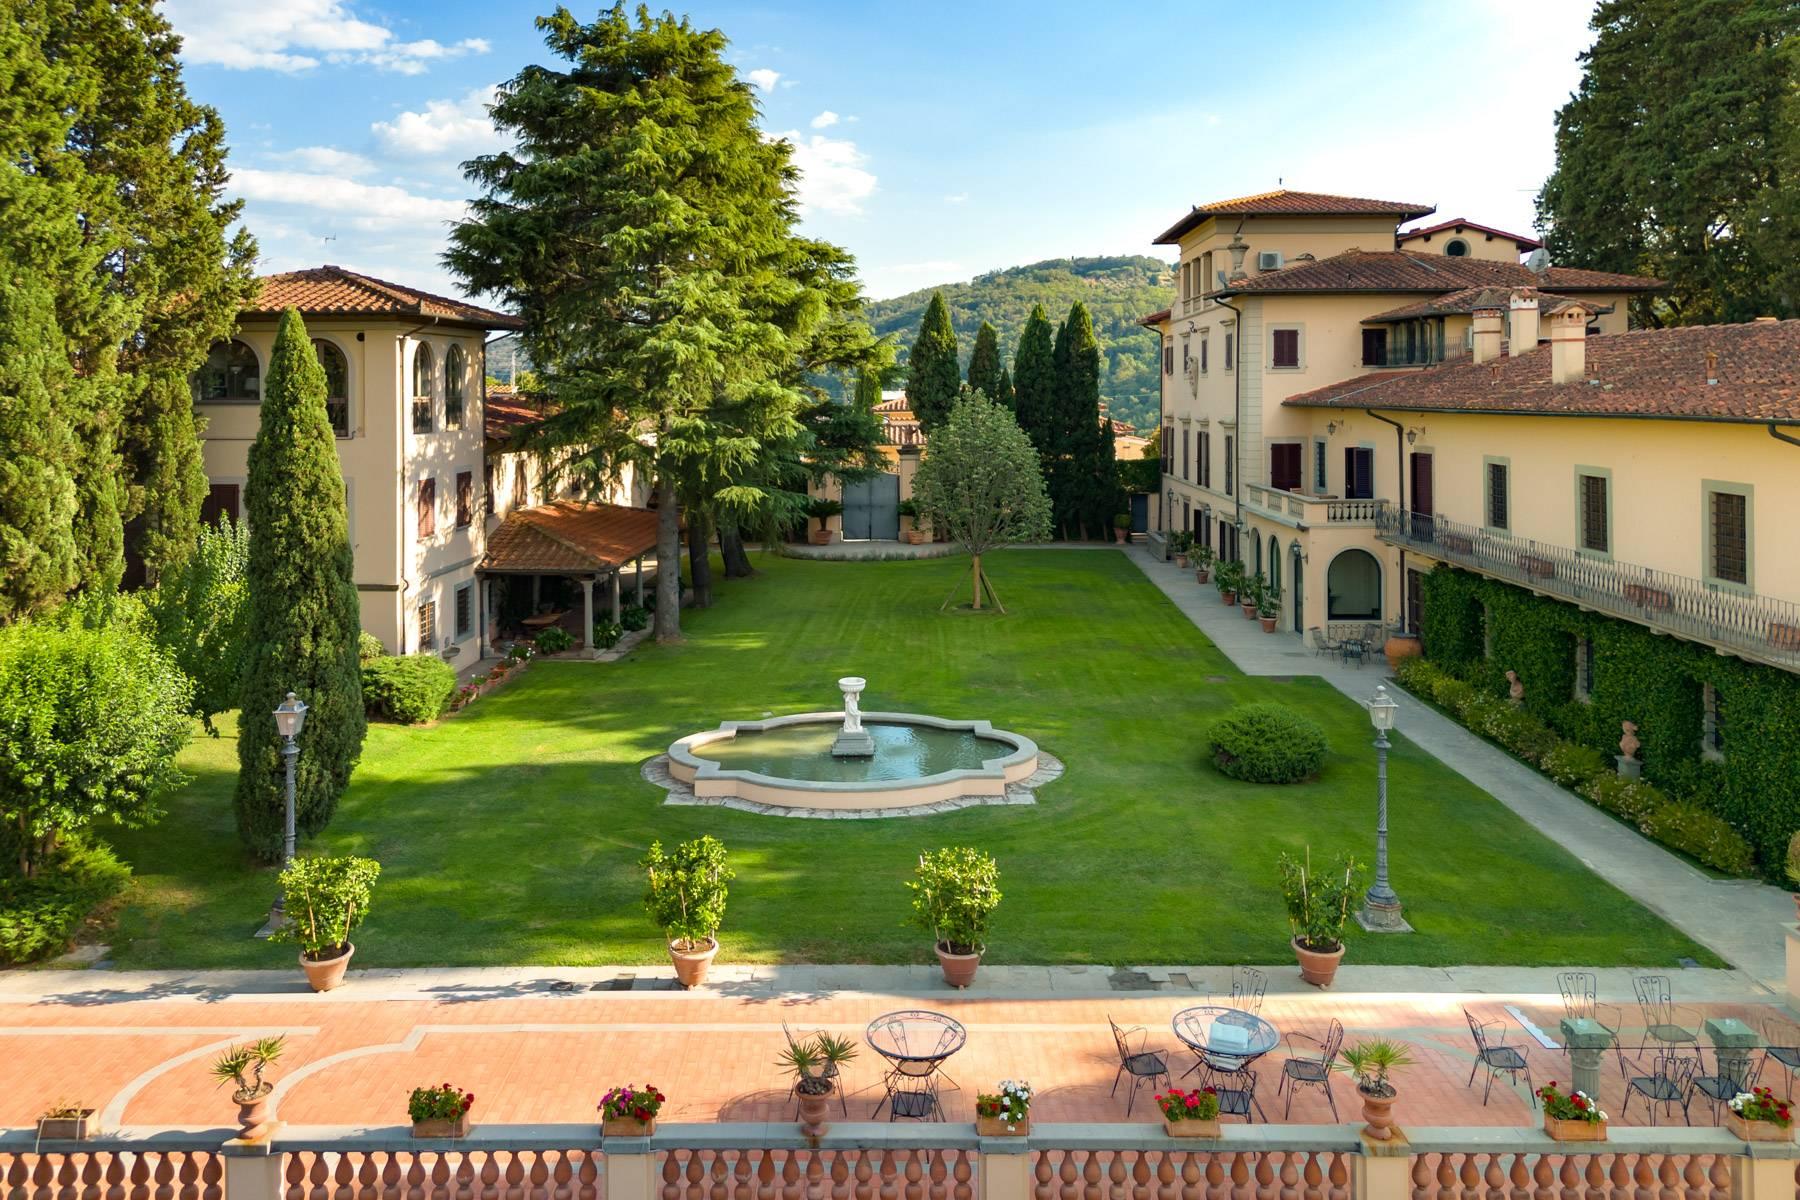 Apartment in a historic villa on the hills of Carmignano - 4